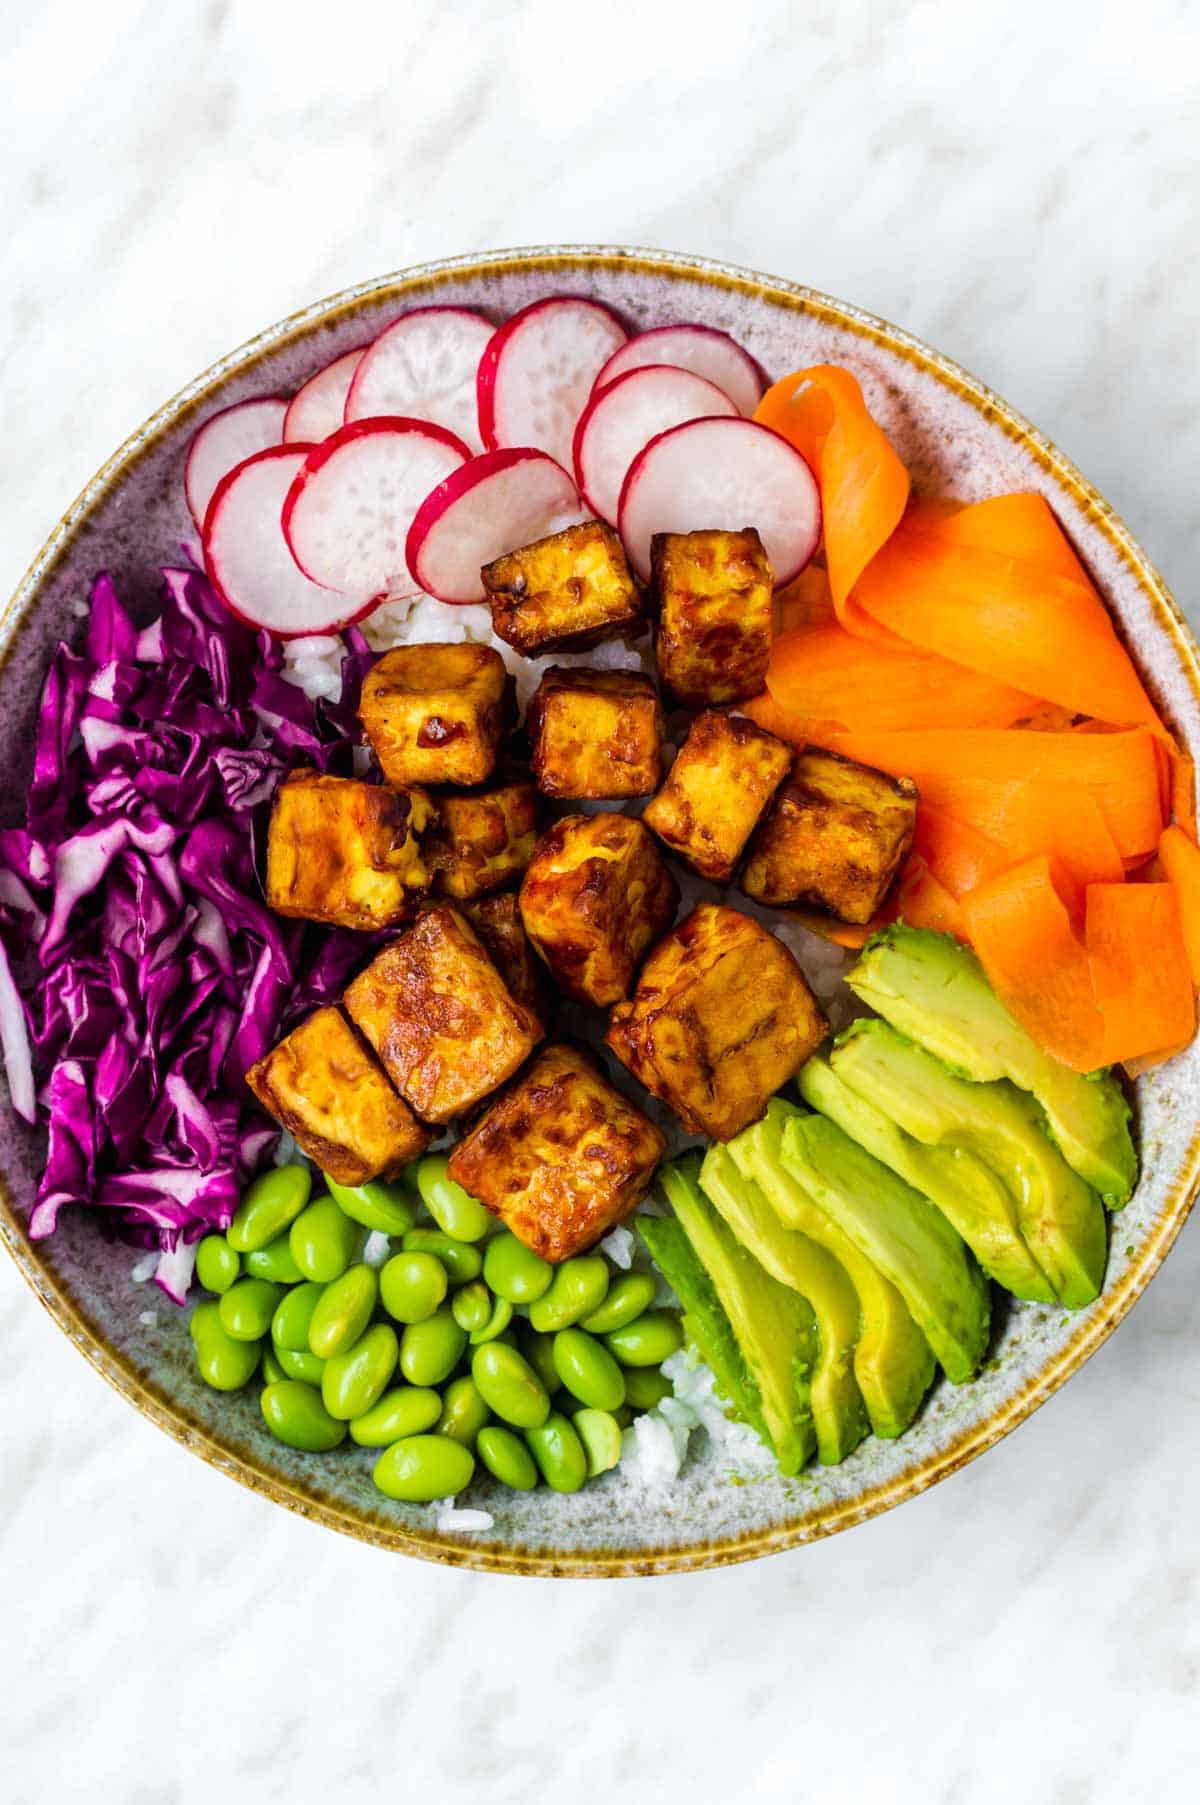 Assembled tofu buddha bowl with carrots, red cabbage, avocado, edamame and radishes.